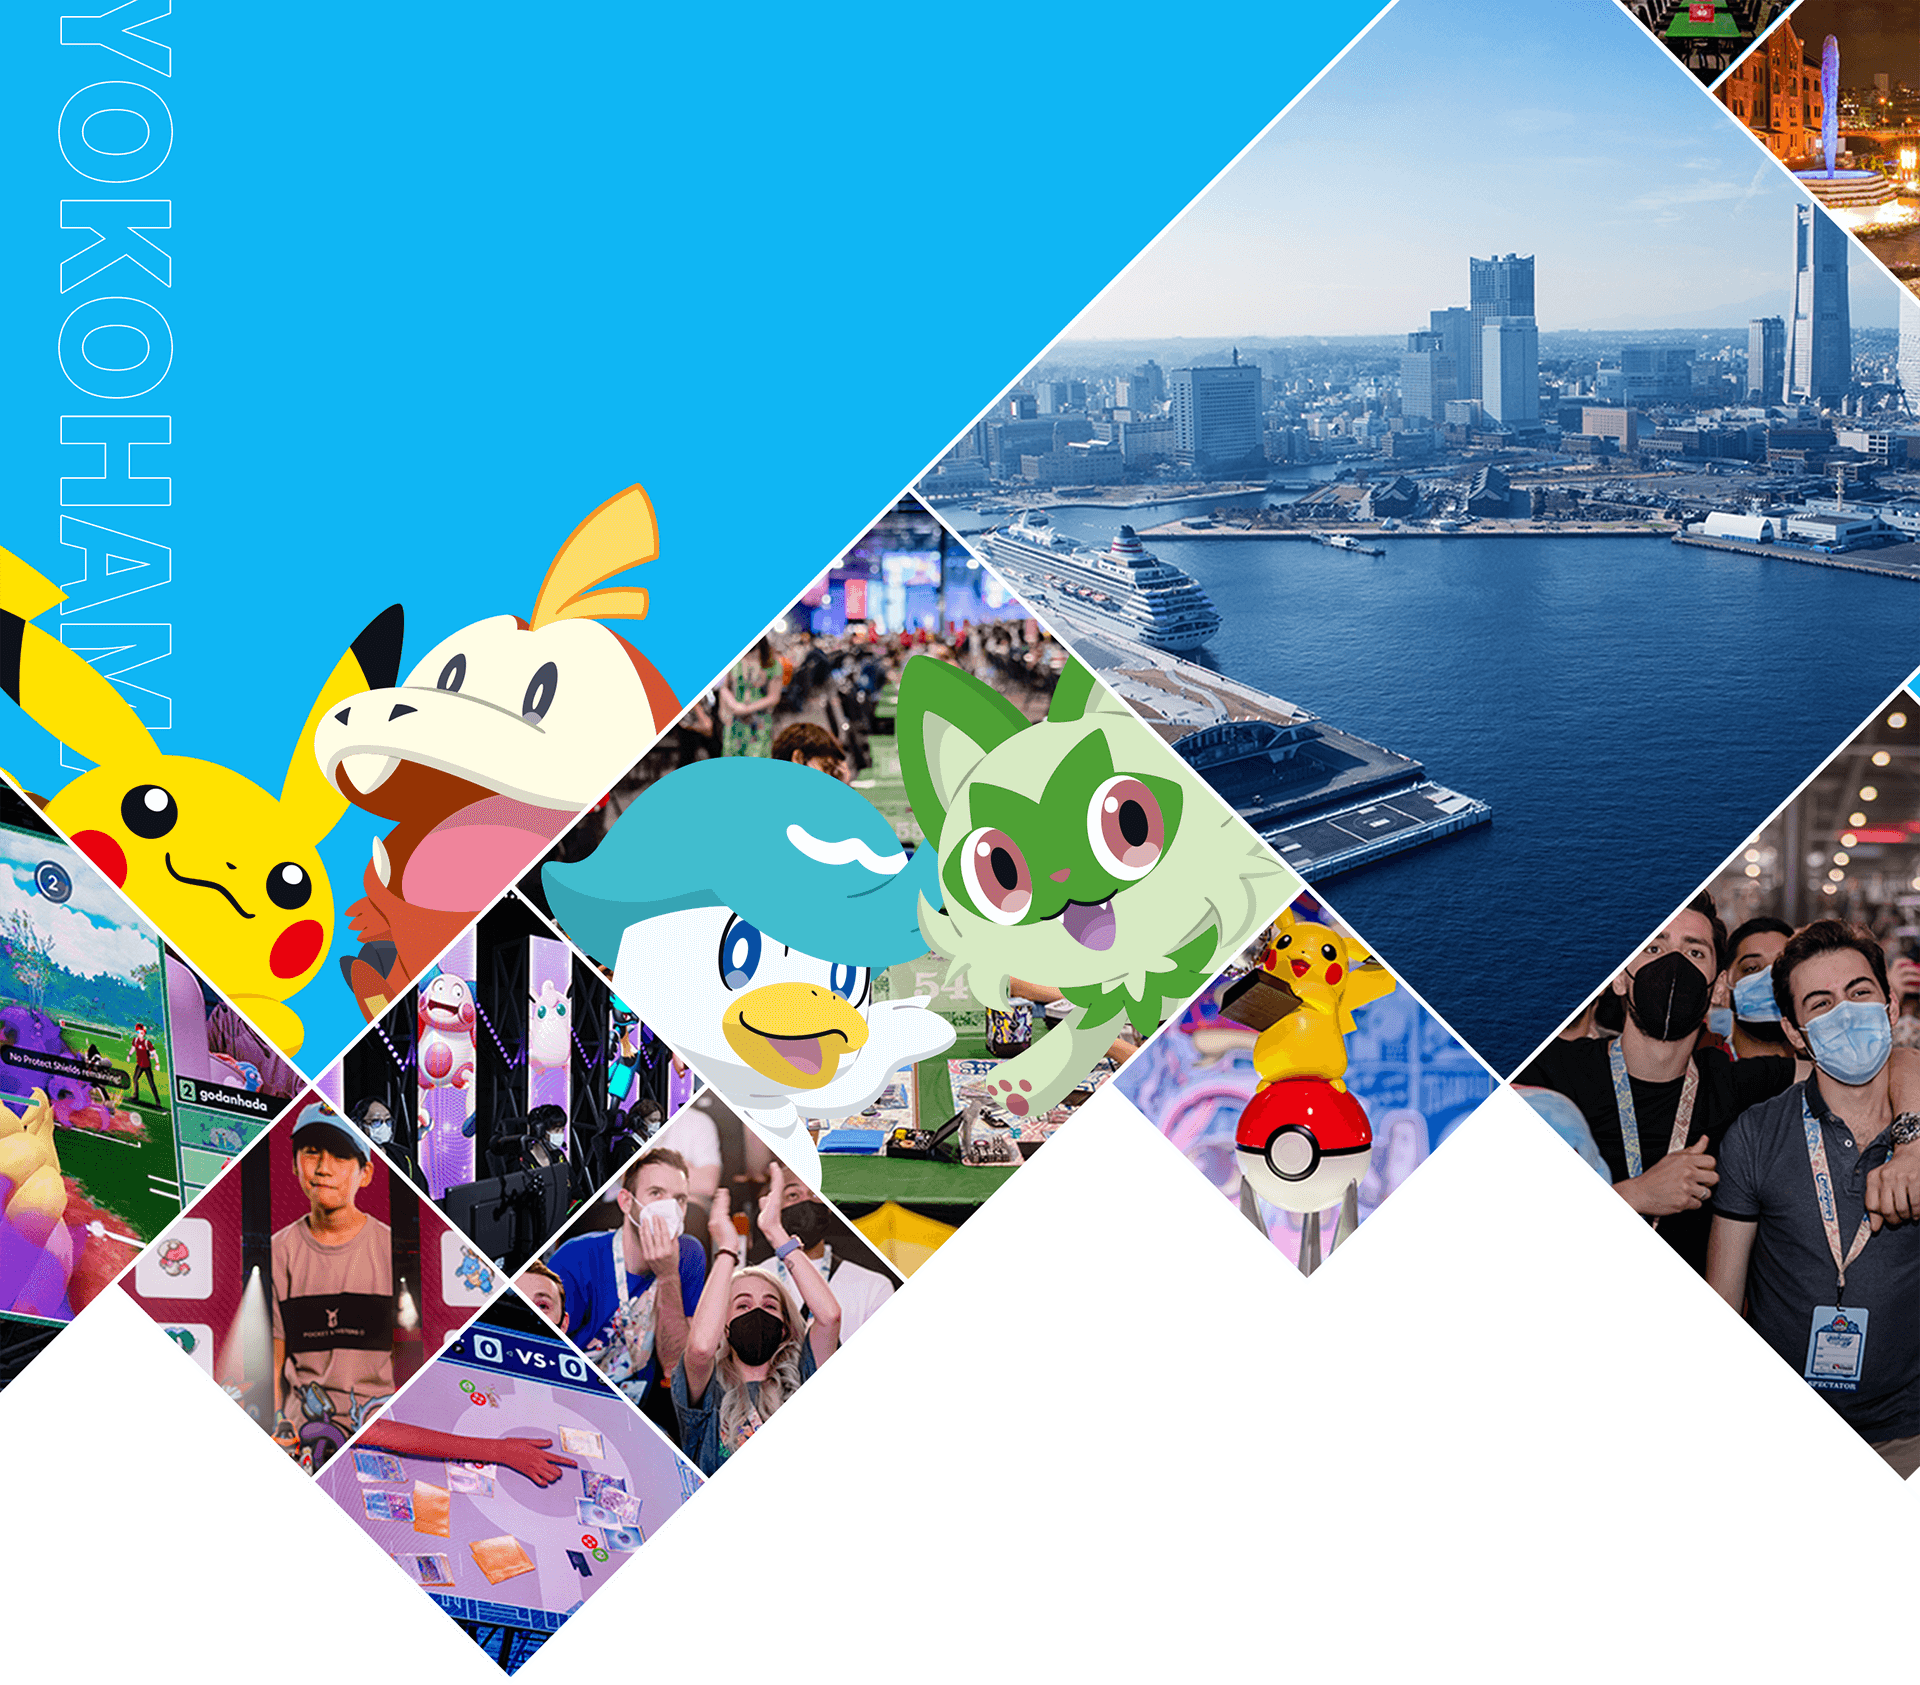 Pokemon world championships 2023Yokohama